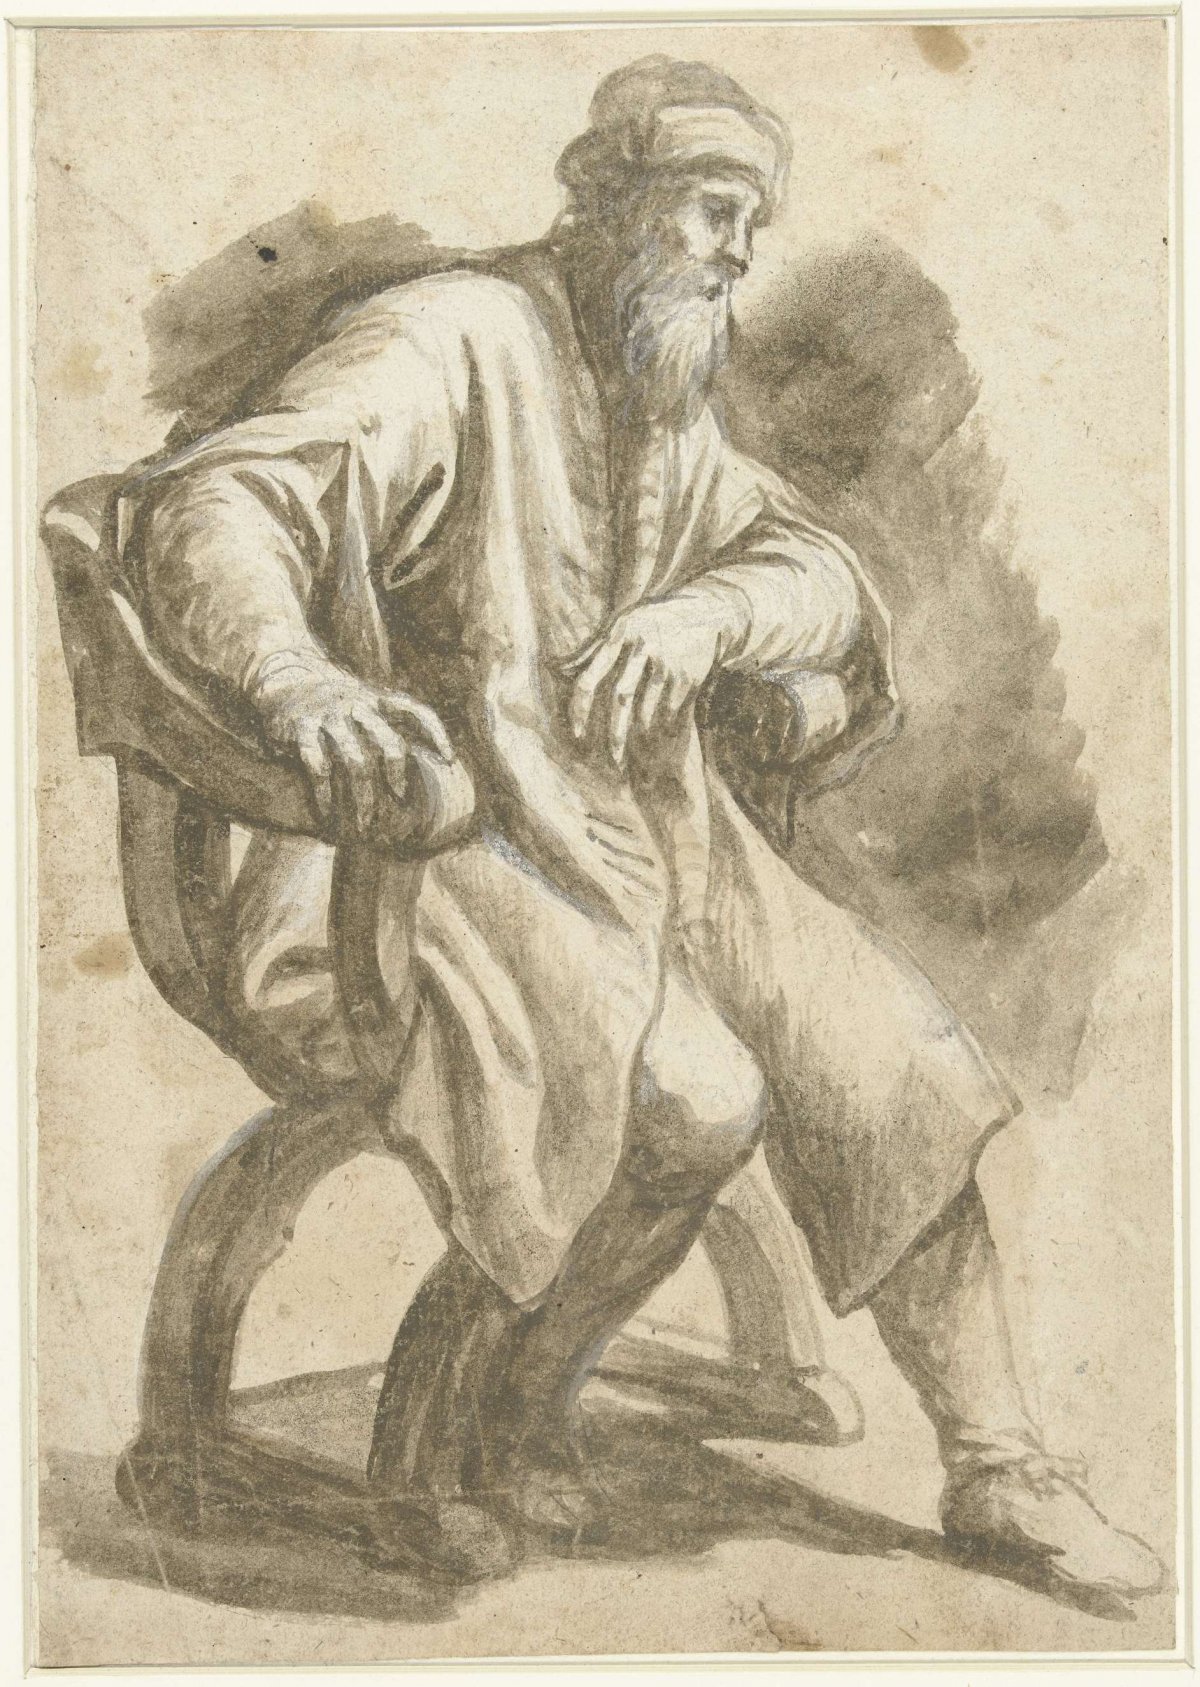 Man in leunstoel gezeten, Francesco Vanni, 1580 - 1620